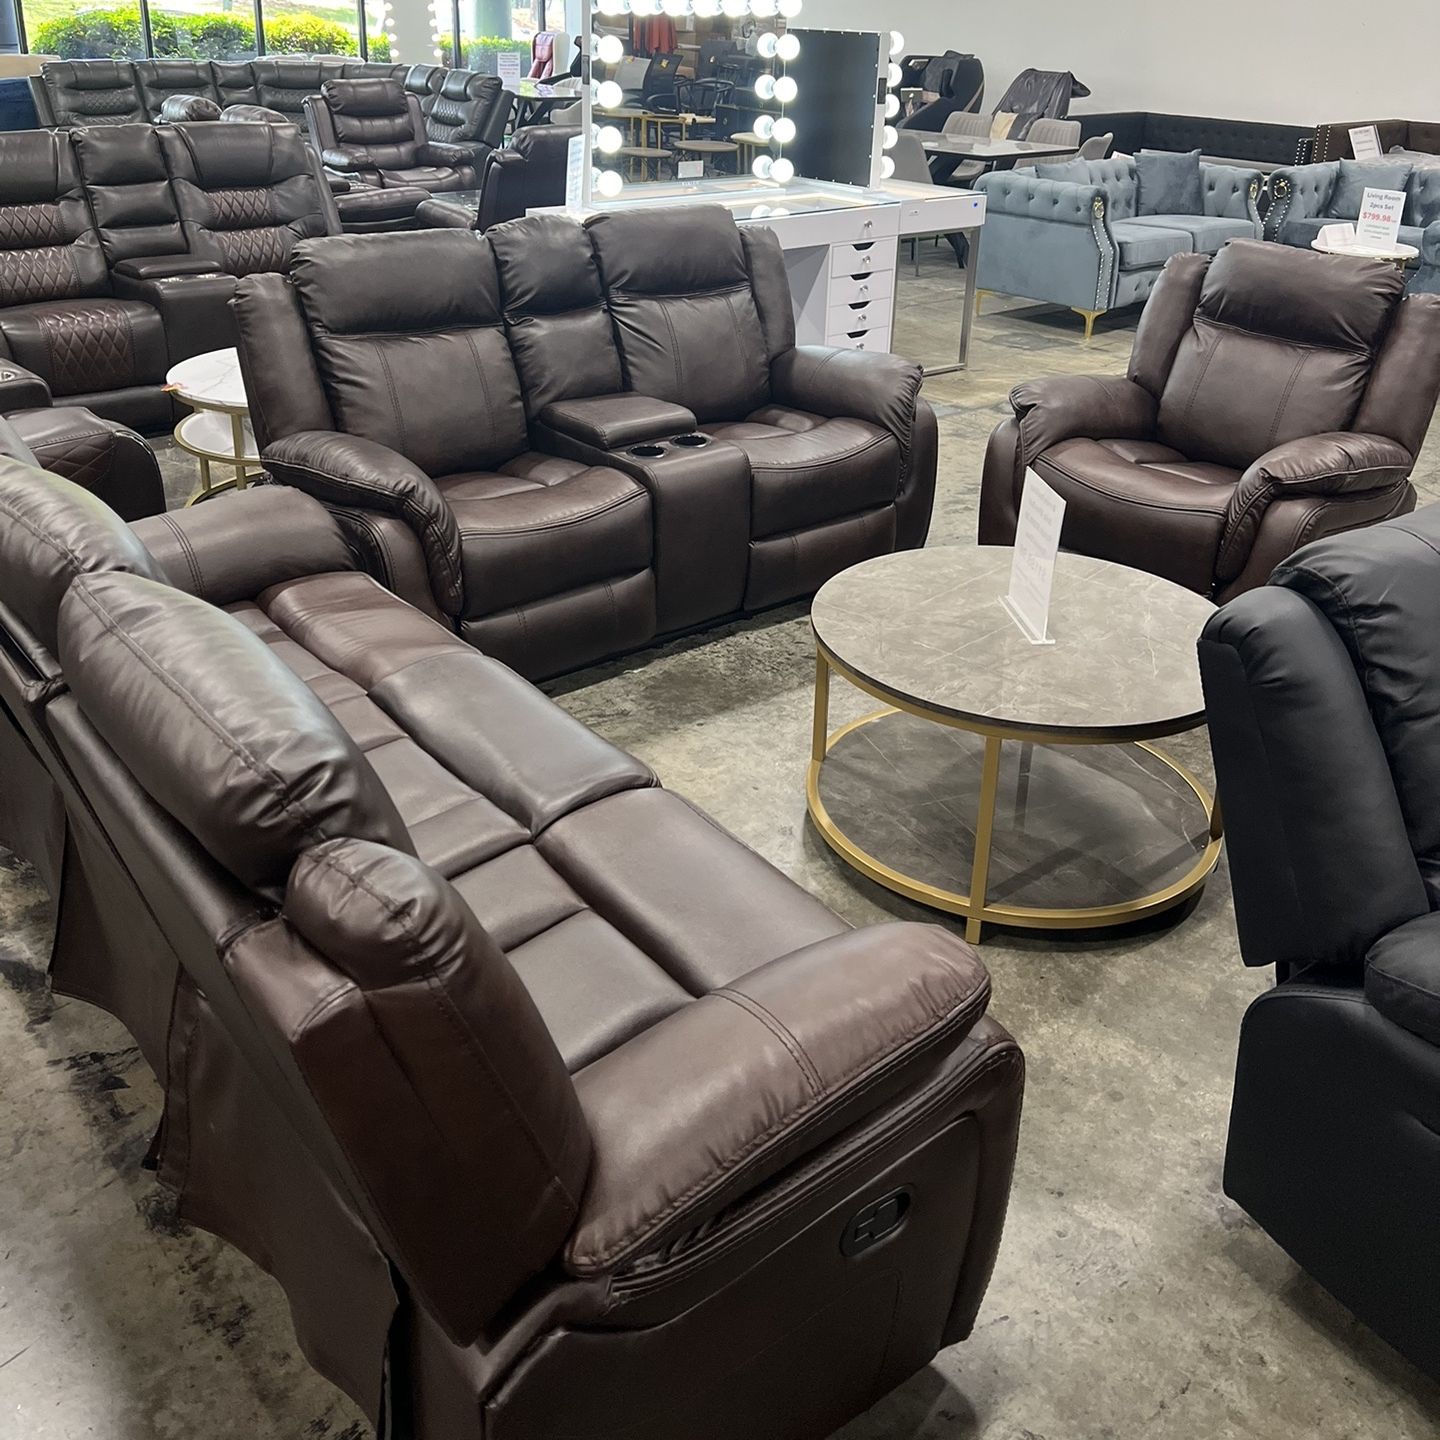 Brown Recliner 3pcs Sofa Set / Juego de sofás reclinables marrones de 3 piezas